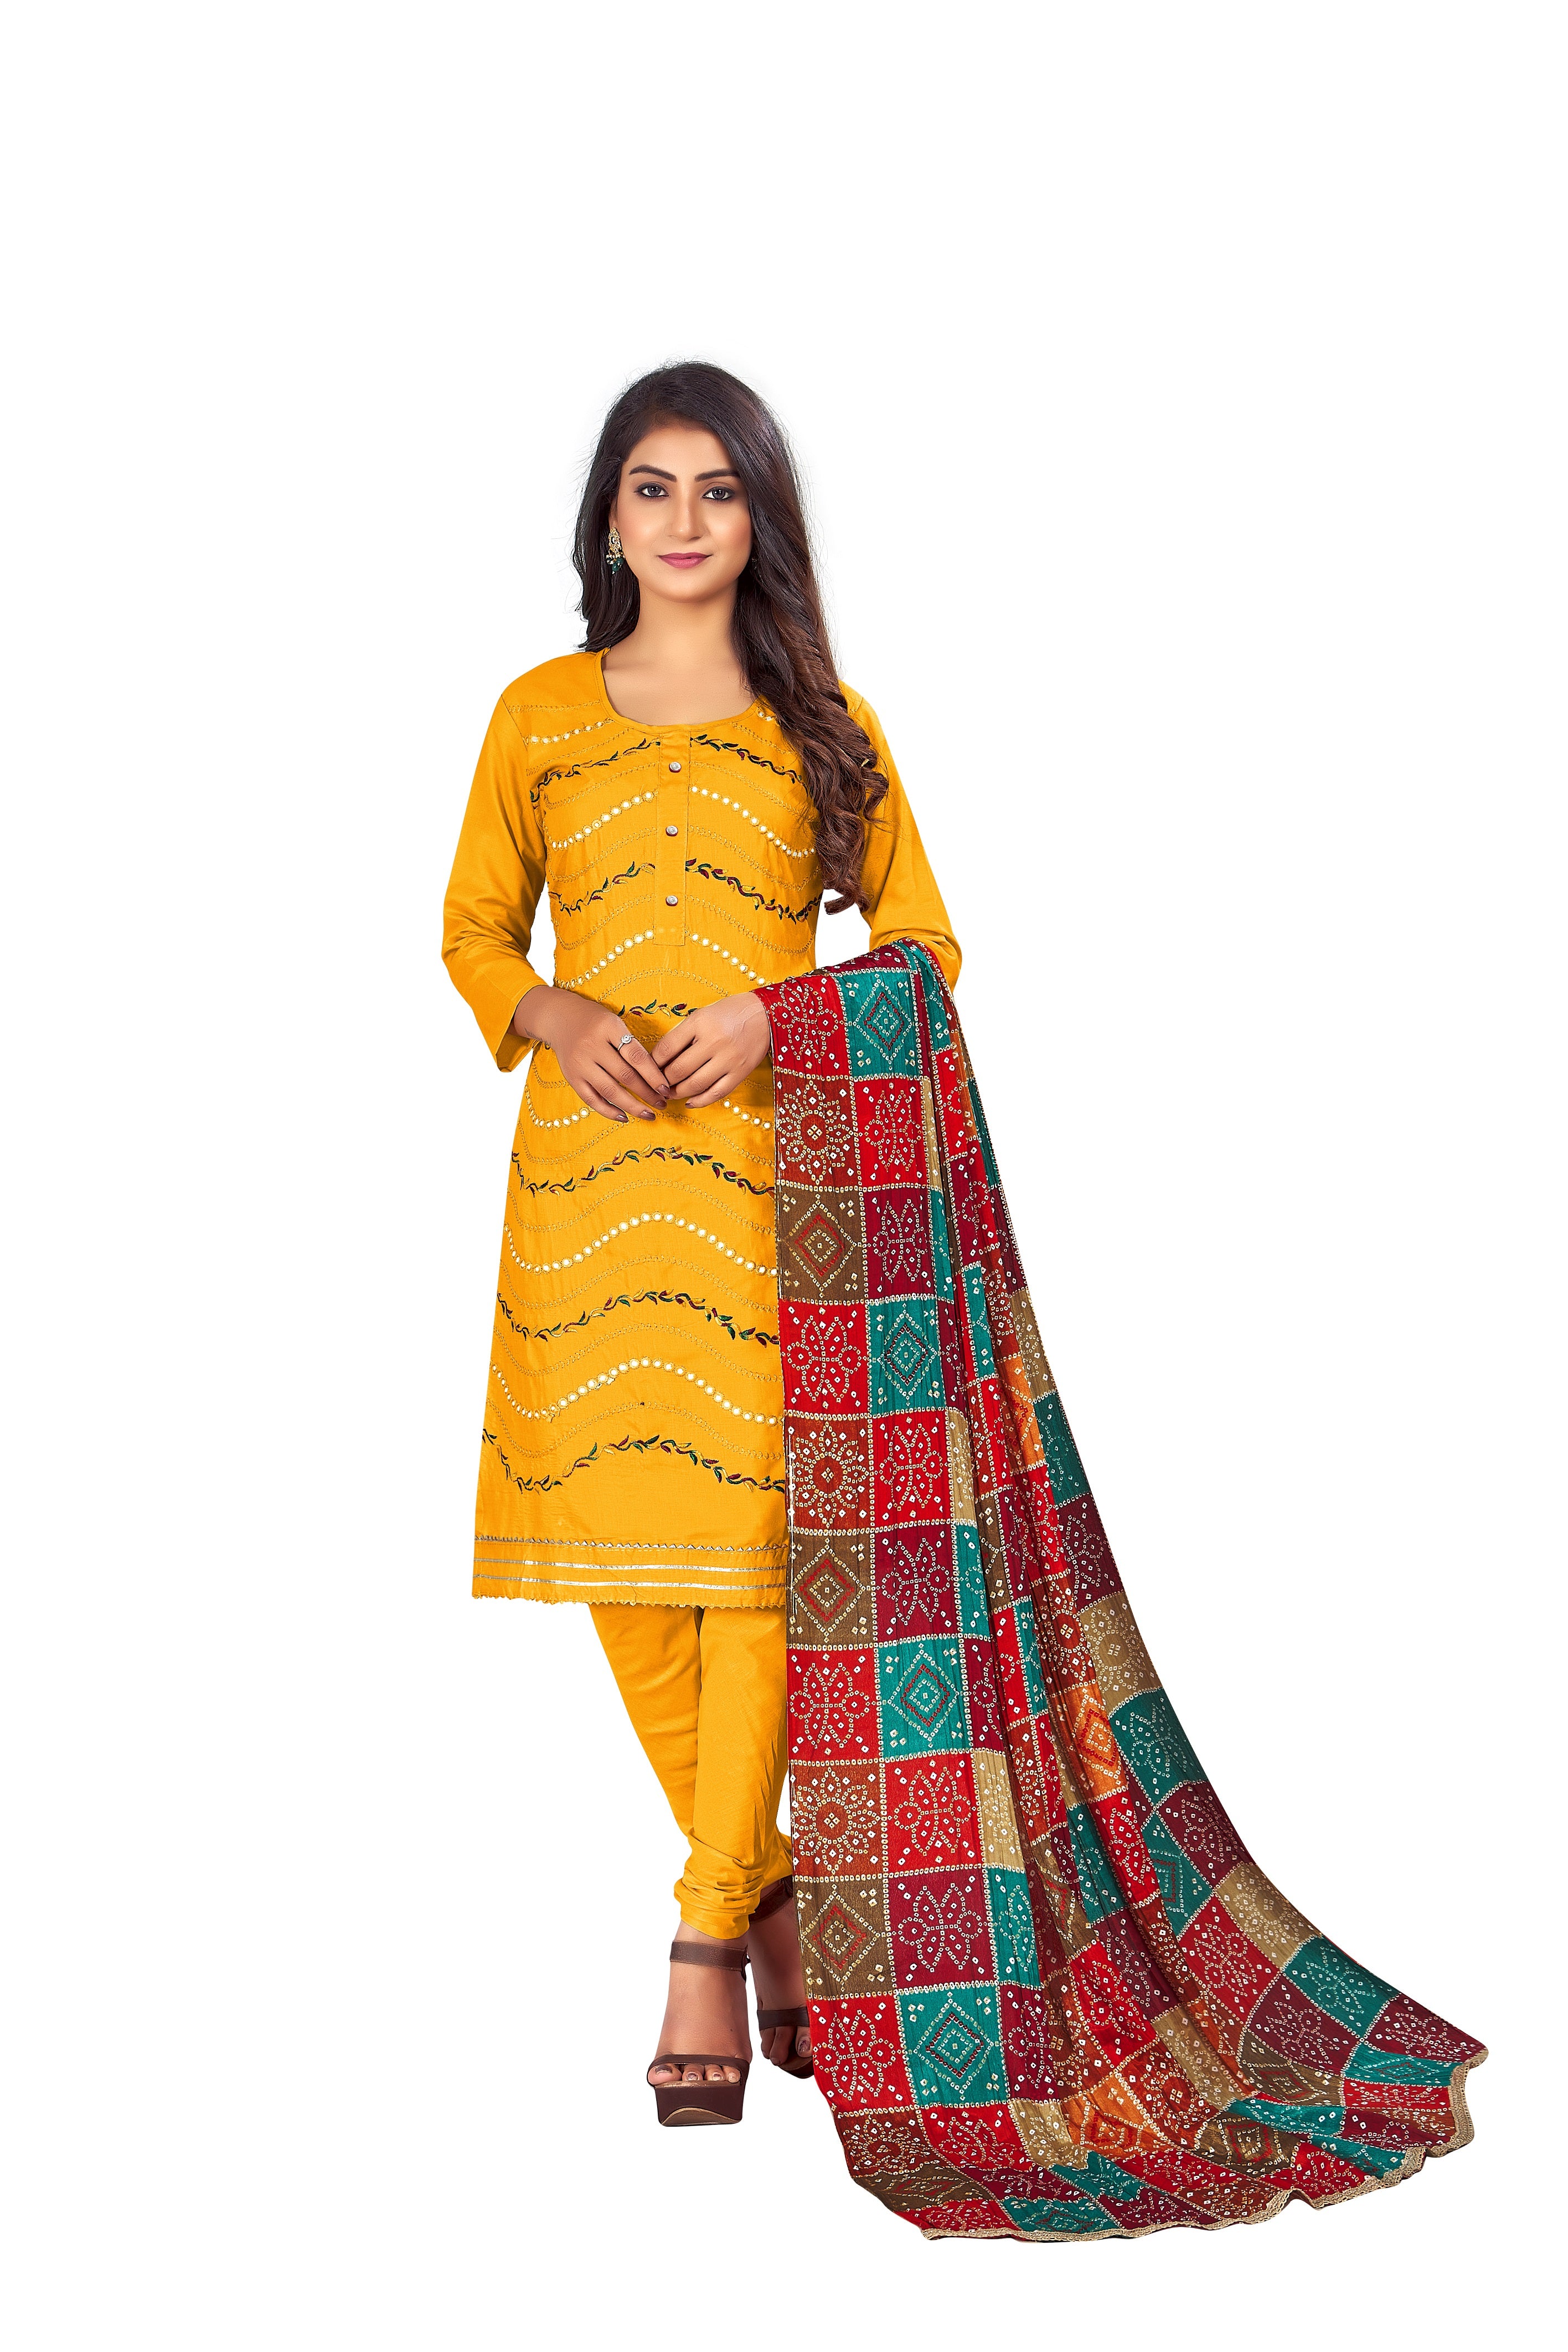 Women's Yellow Colour Semi-Stitched Suit Sets - Dwija Fashion